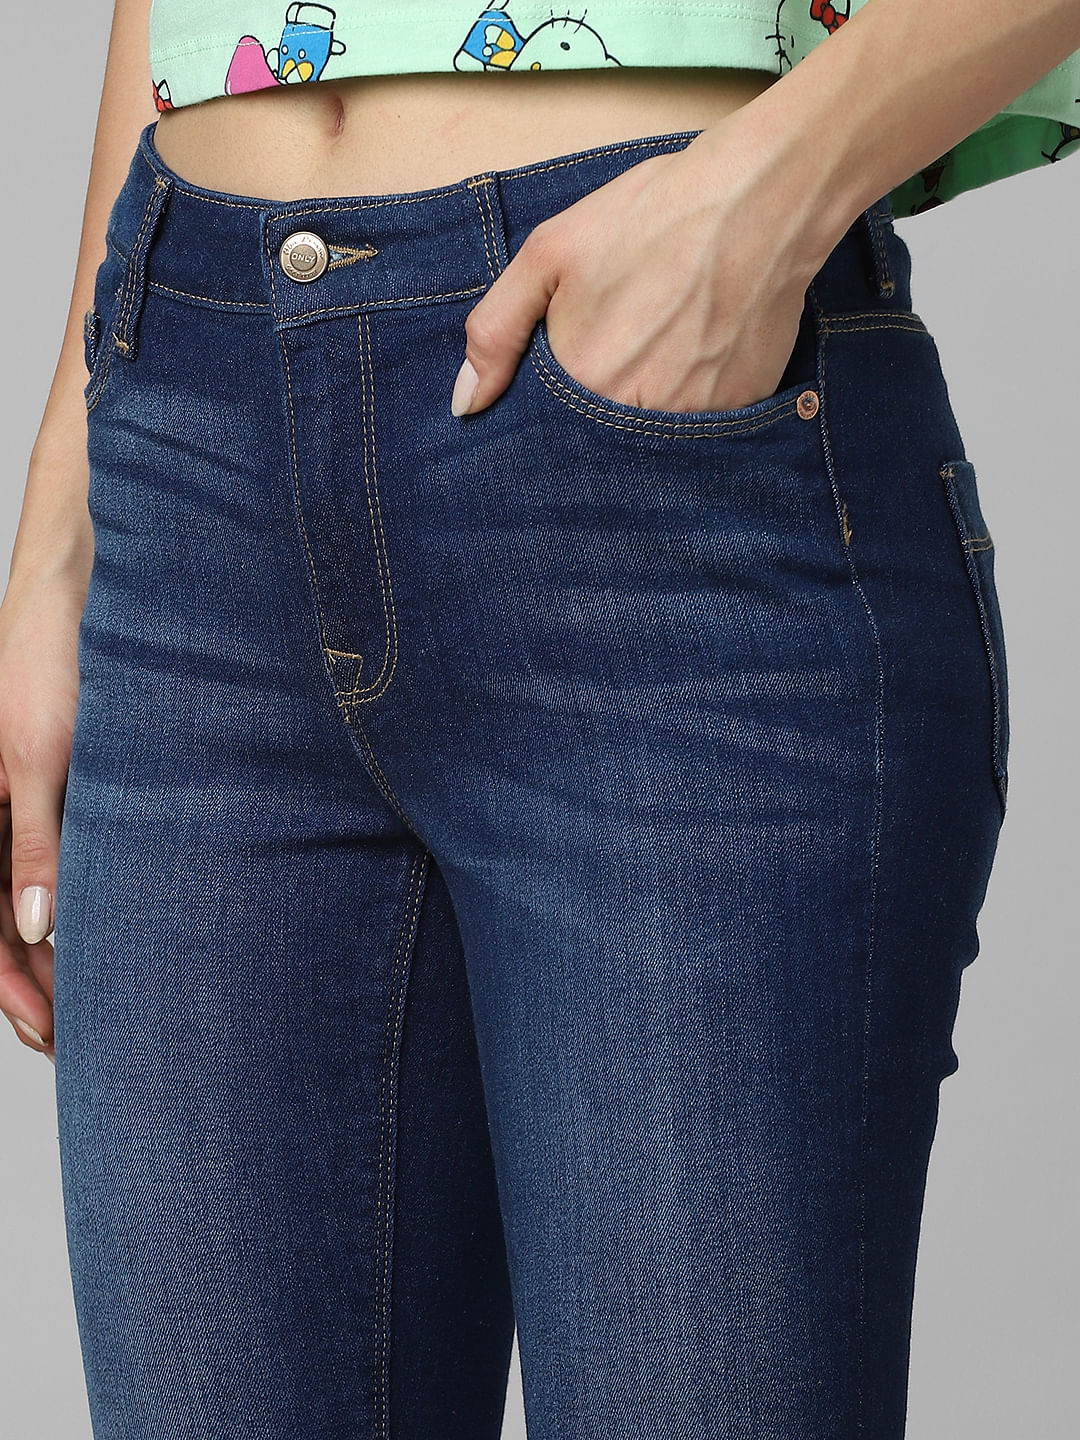 Buy Light Blue Low Rise Skinny Jeans For Women Online in India | VeroModa